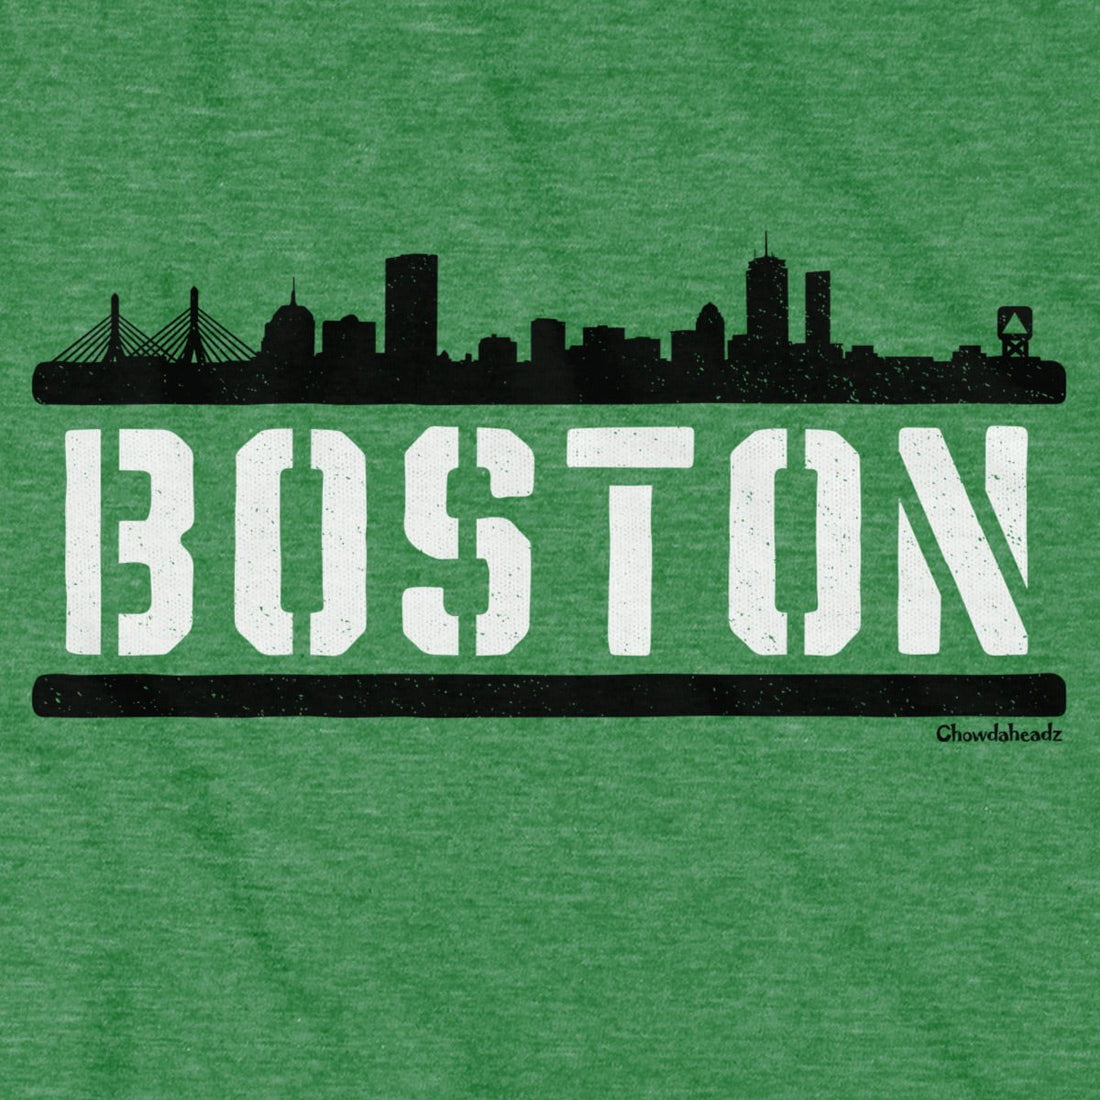 Boston Red Sox Fanatics Branded Hometown Nation T-shirt - Shibtee Clothing